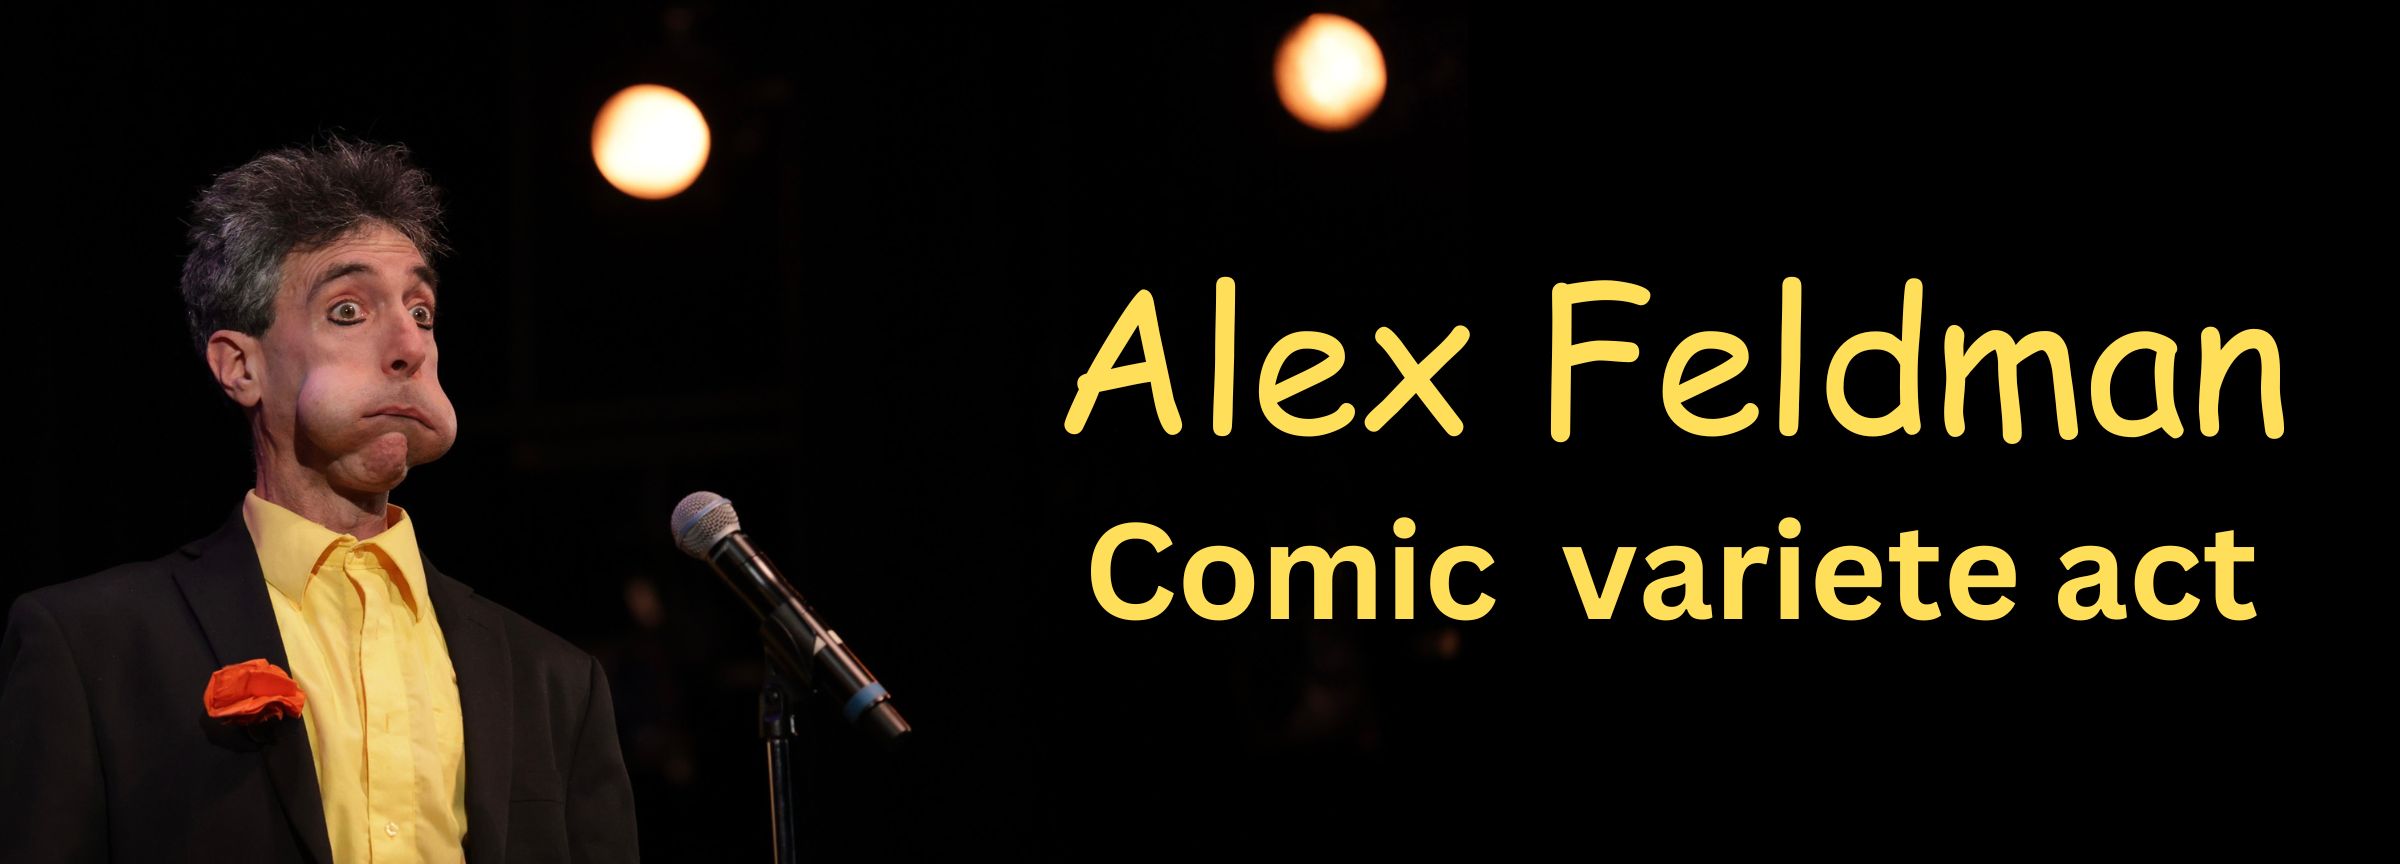 Alex Feldman alternative comedy and unique variety act. 